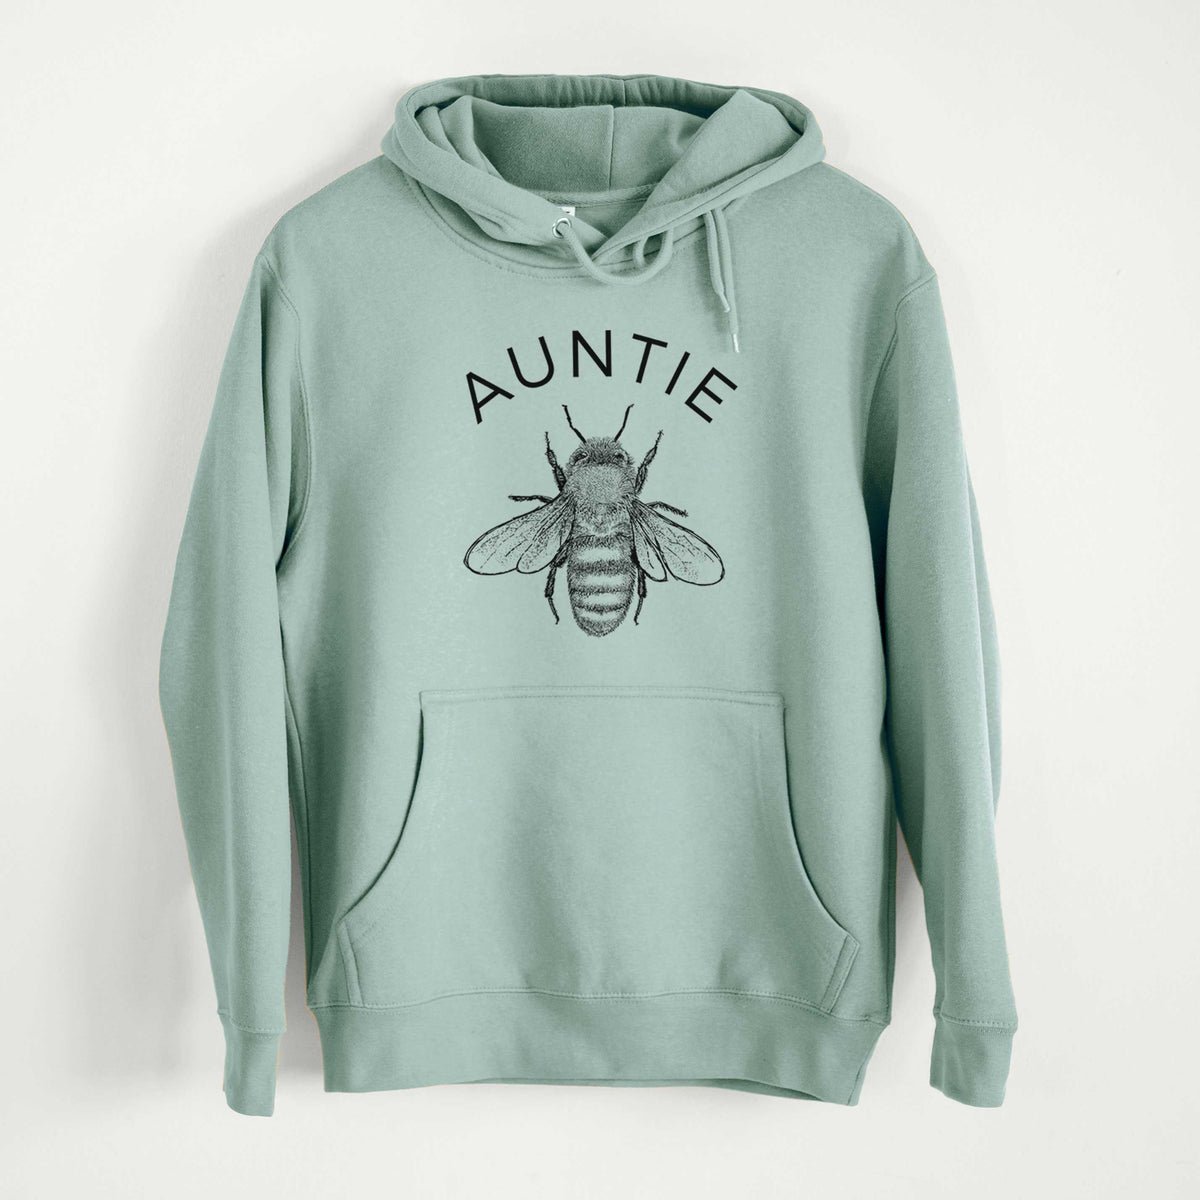 Auntie Bee  - Mid-Weight Unisex Premium Blend Hoodie